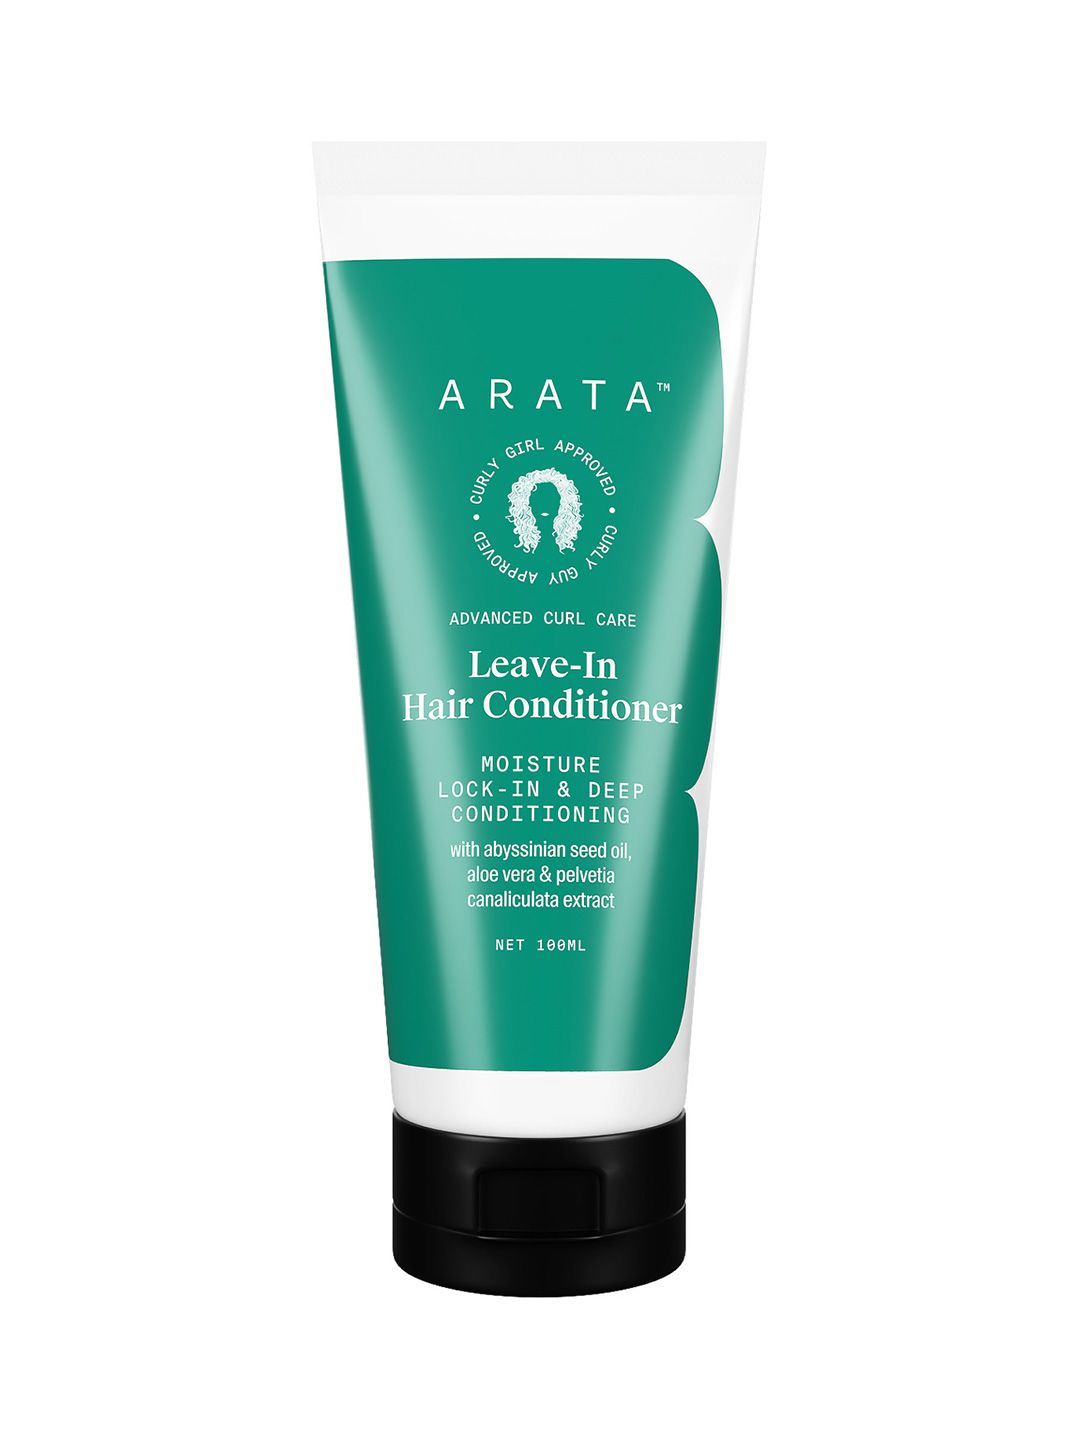 ARATA Advanced Curl Care Leave-In Hair Conditioner - 100 ml Price in India